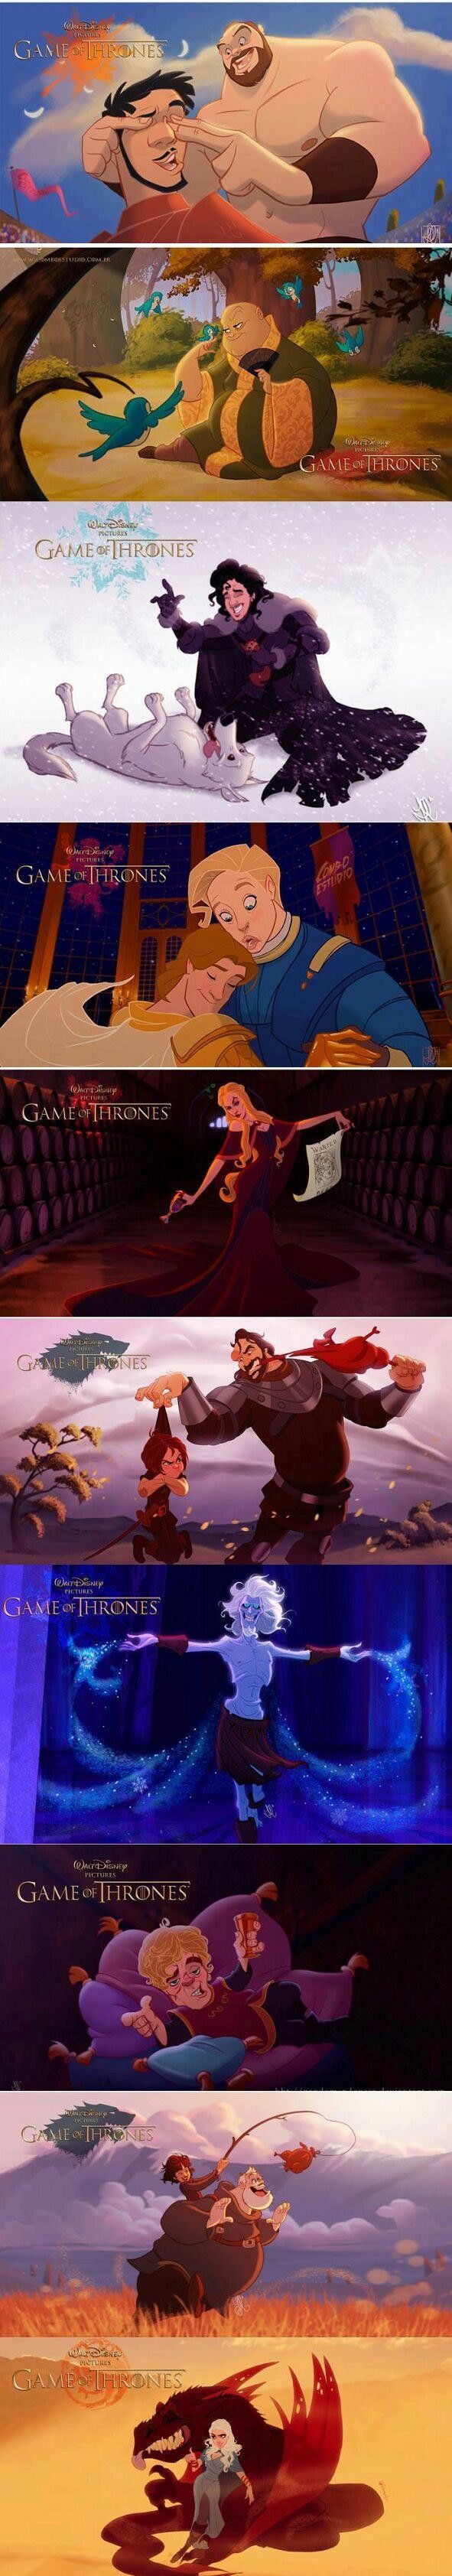 If Game Of Thrones went Disney